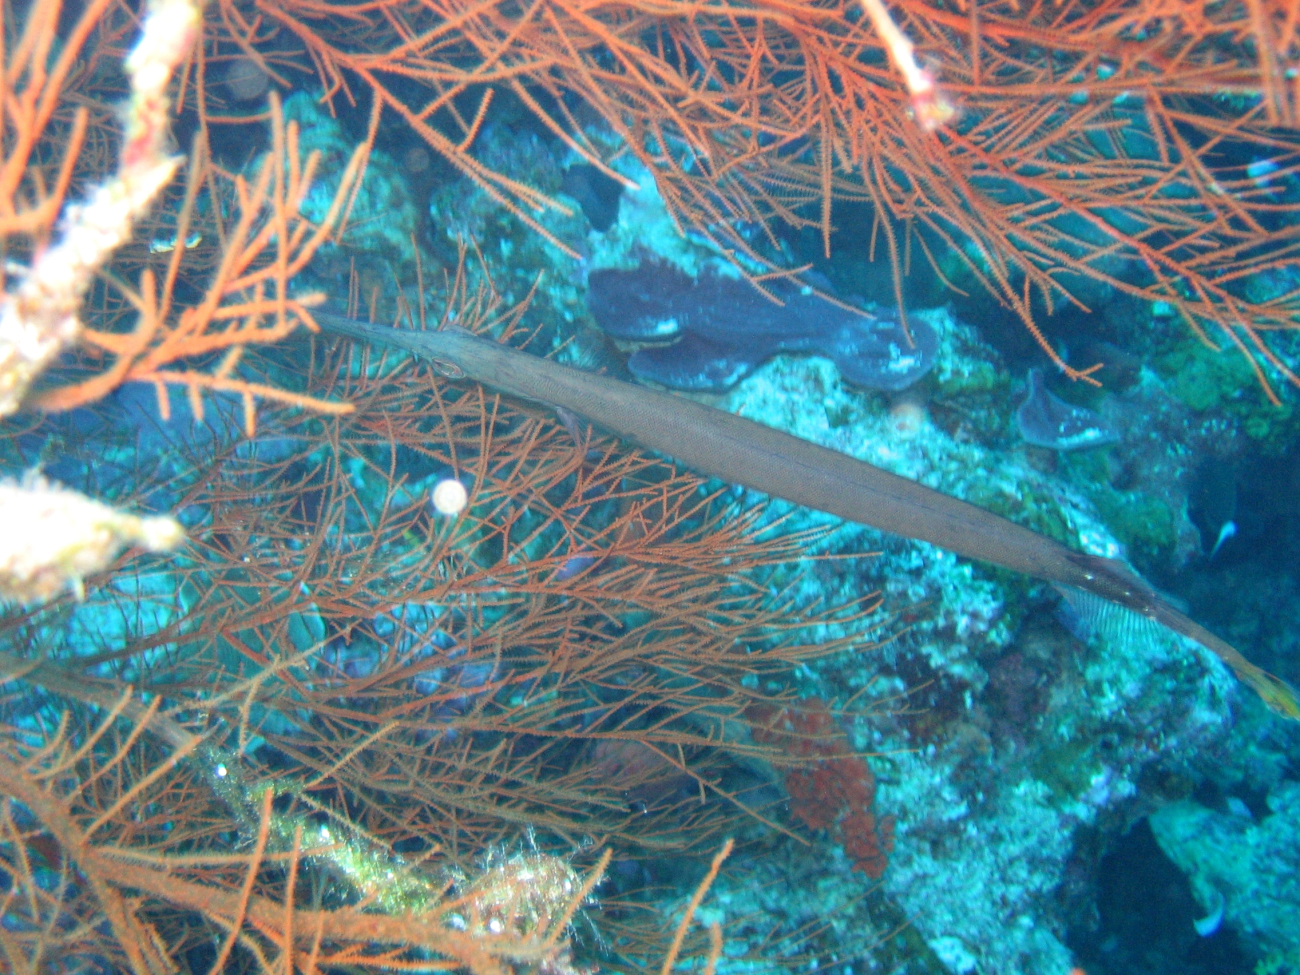 Trumpetfish (Aulostomus sp